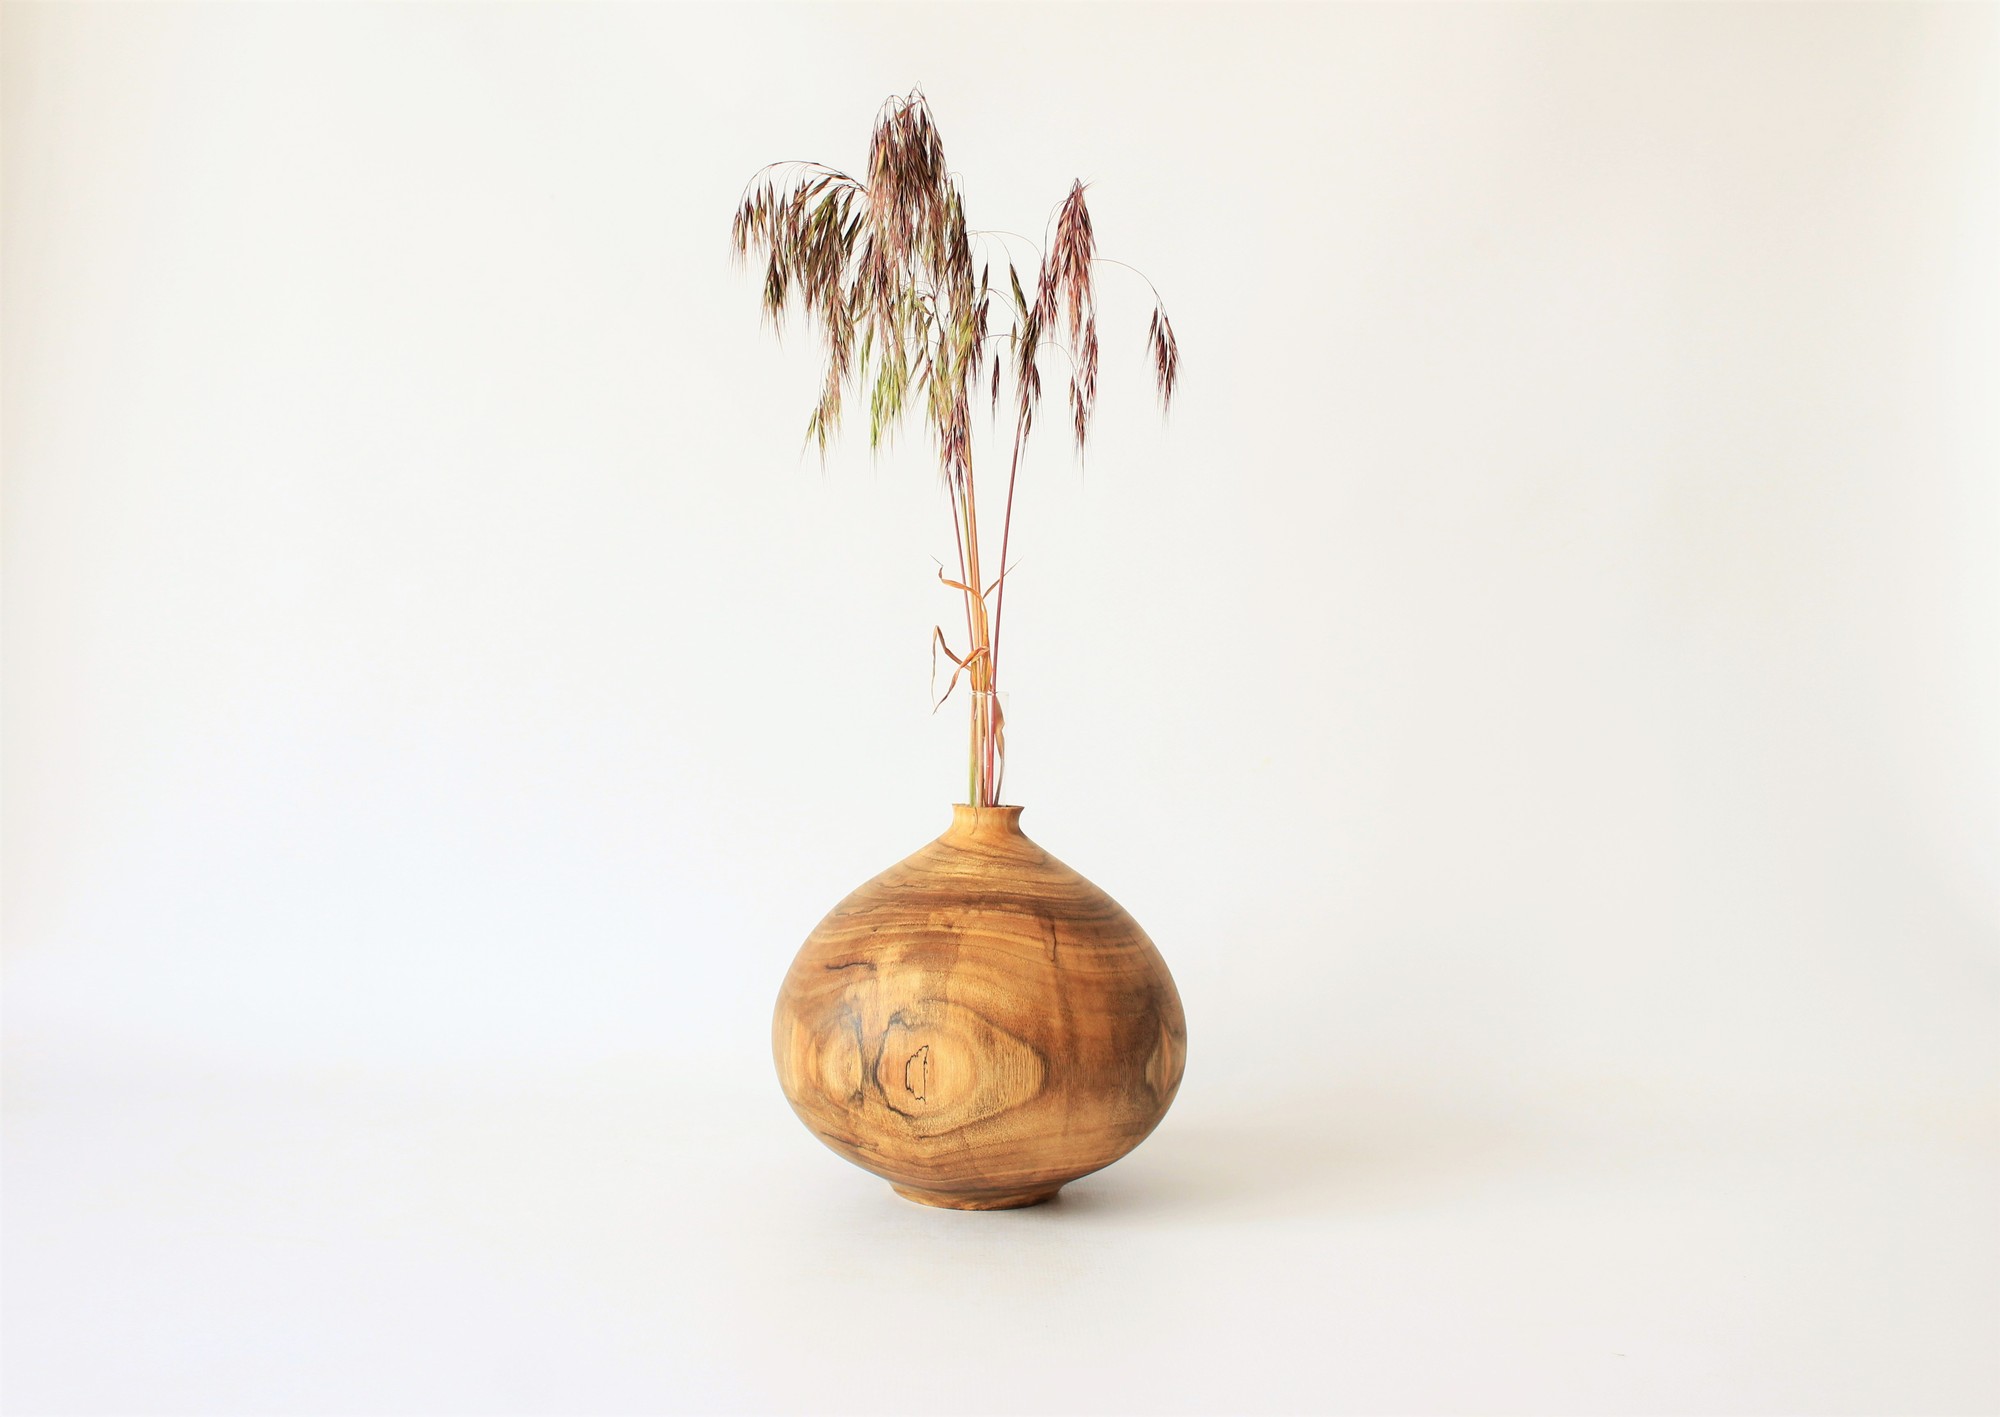 Decorative rustic  vase for dried flower, handmade wooden living room decor